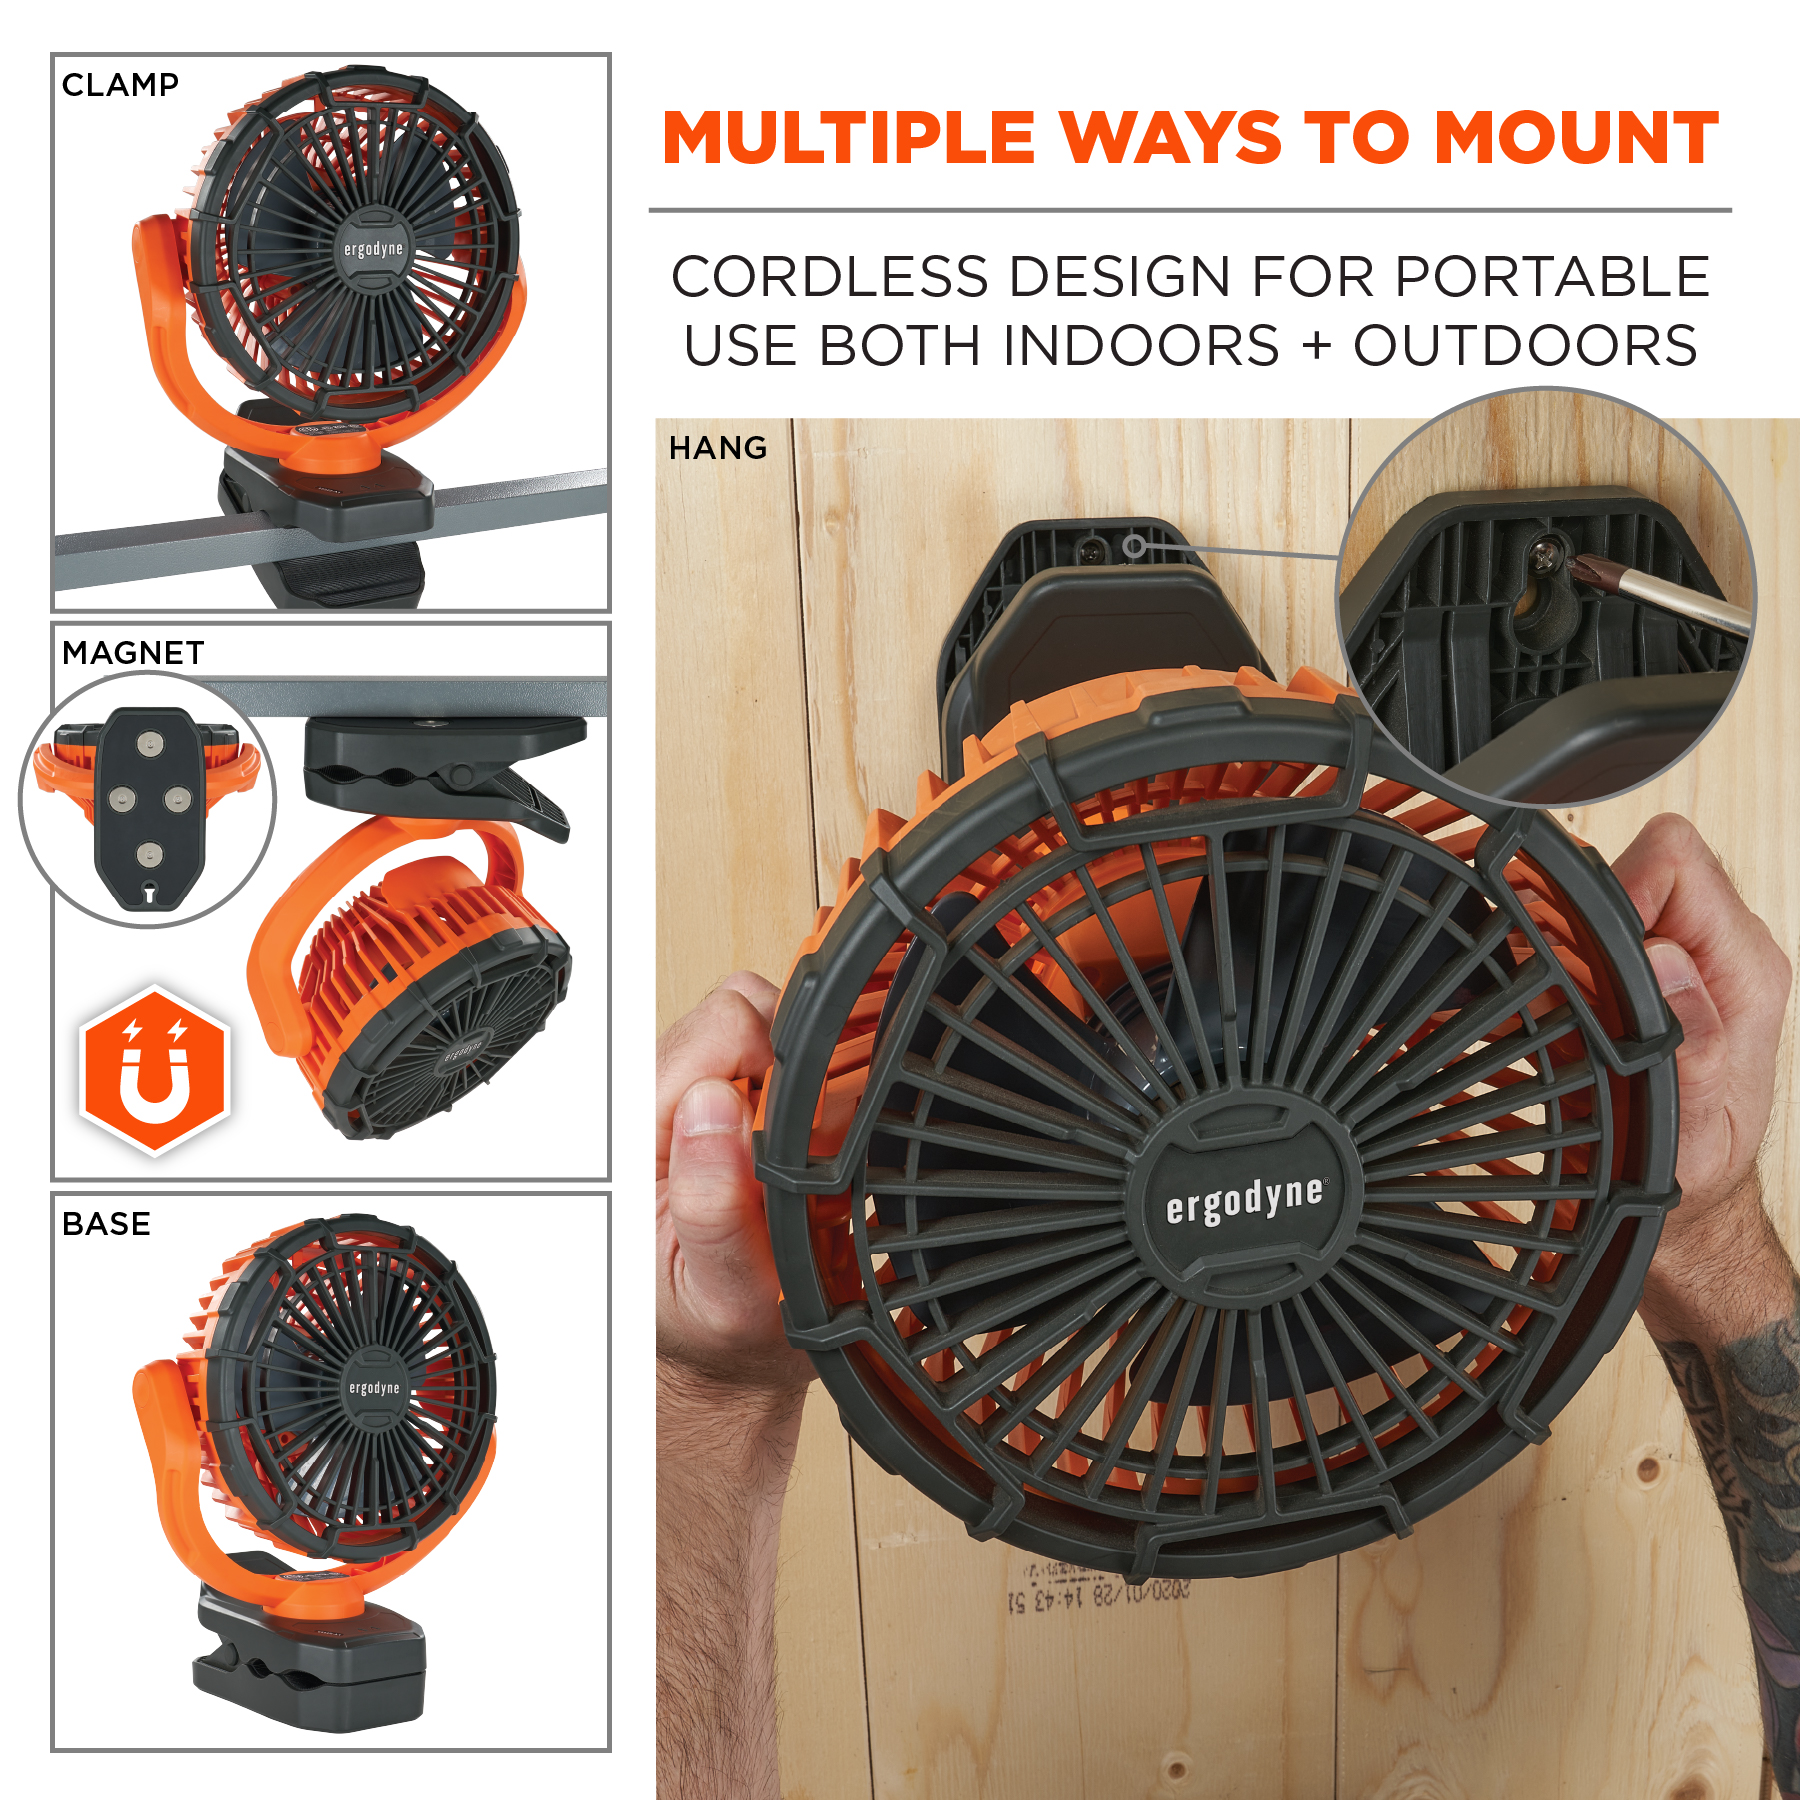 https://www.ergodyne.com/sites/default/files/product-images/12800-6090-rechargeable-portable-jobsite-fan-orange-multiple-ways-to-mount.jpg